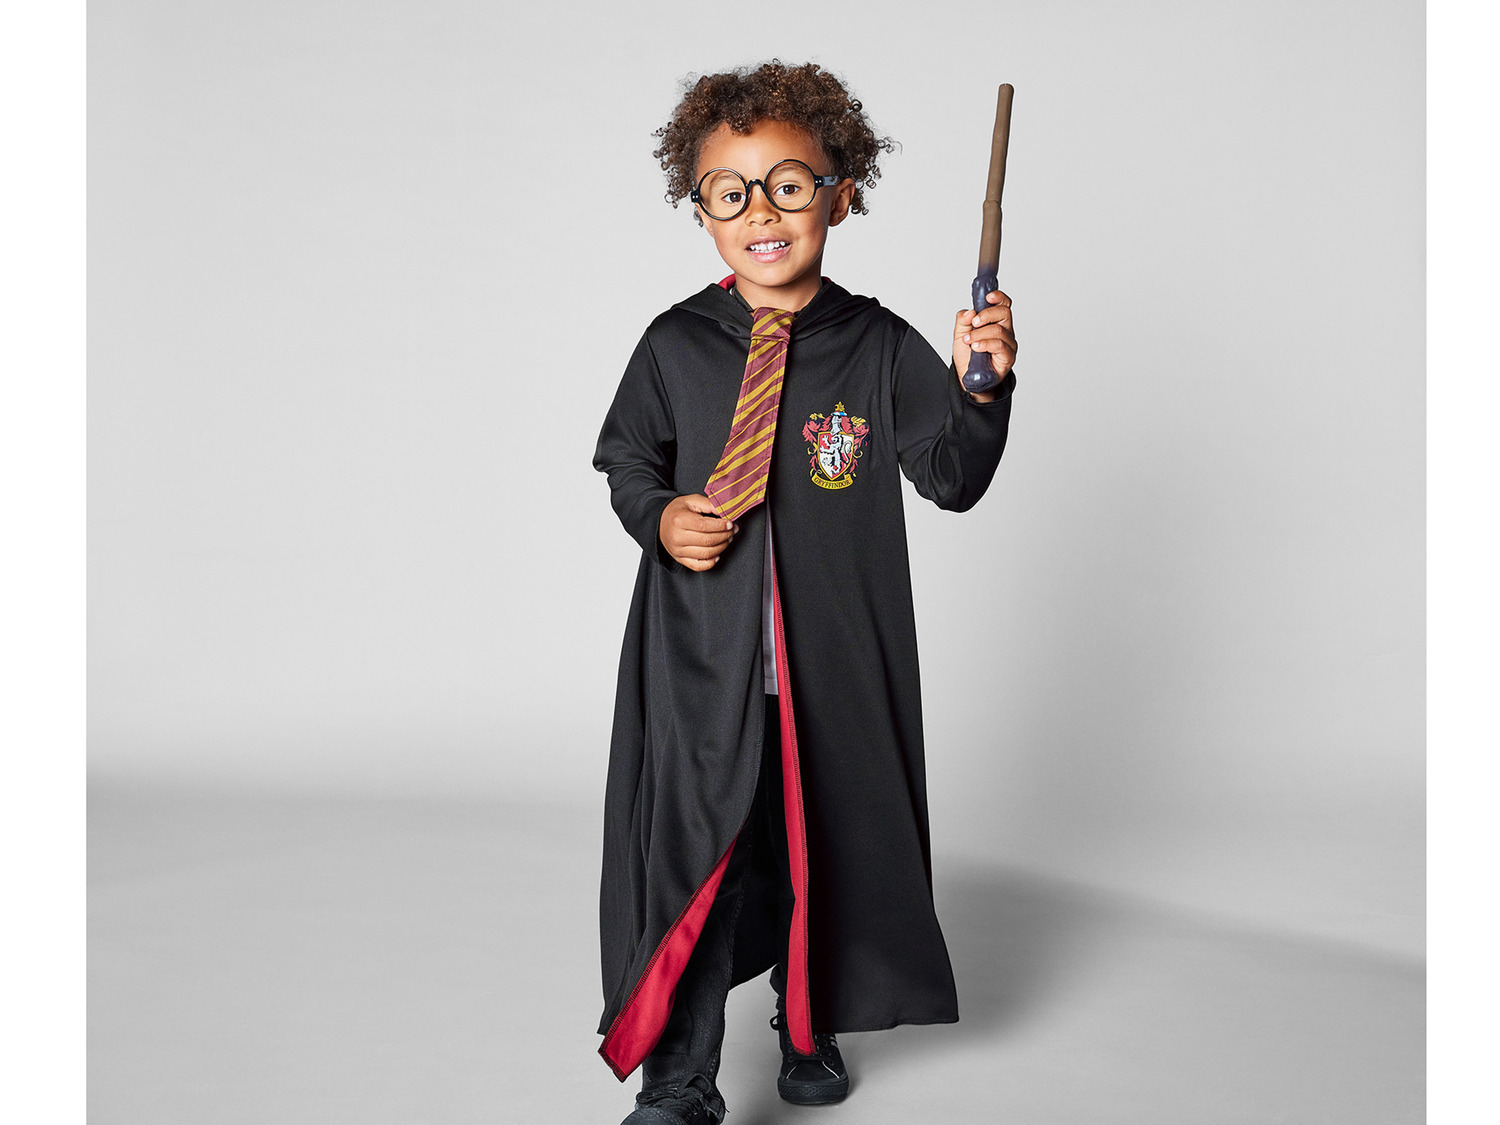 Costume fille Harry Potter